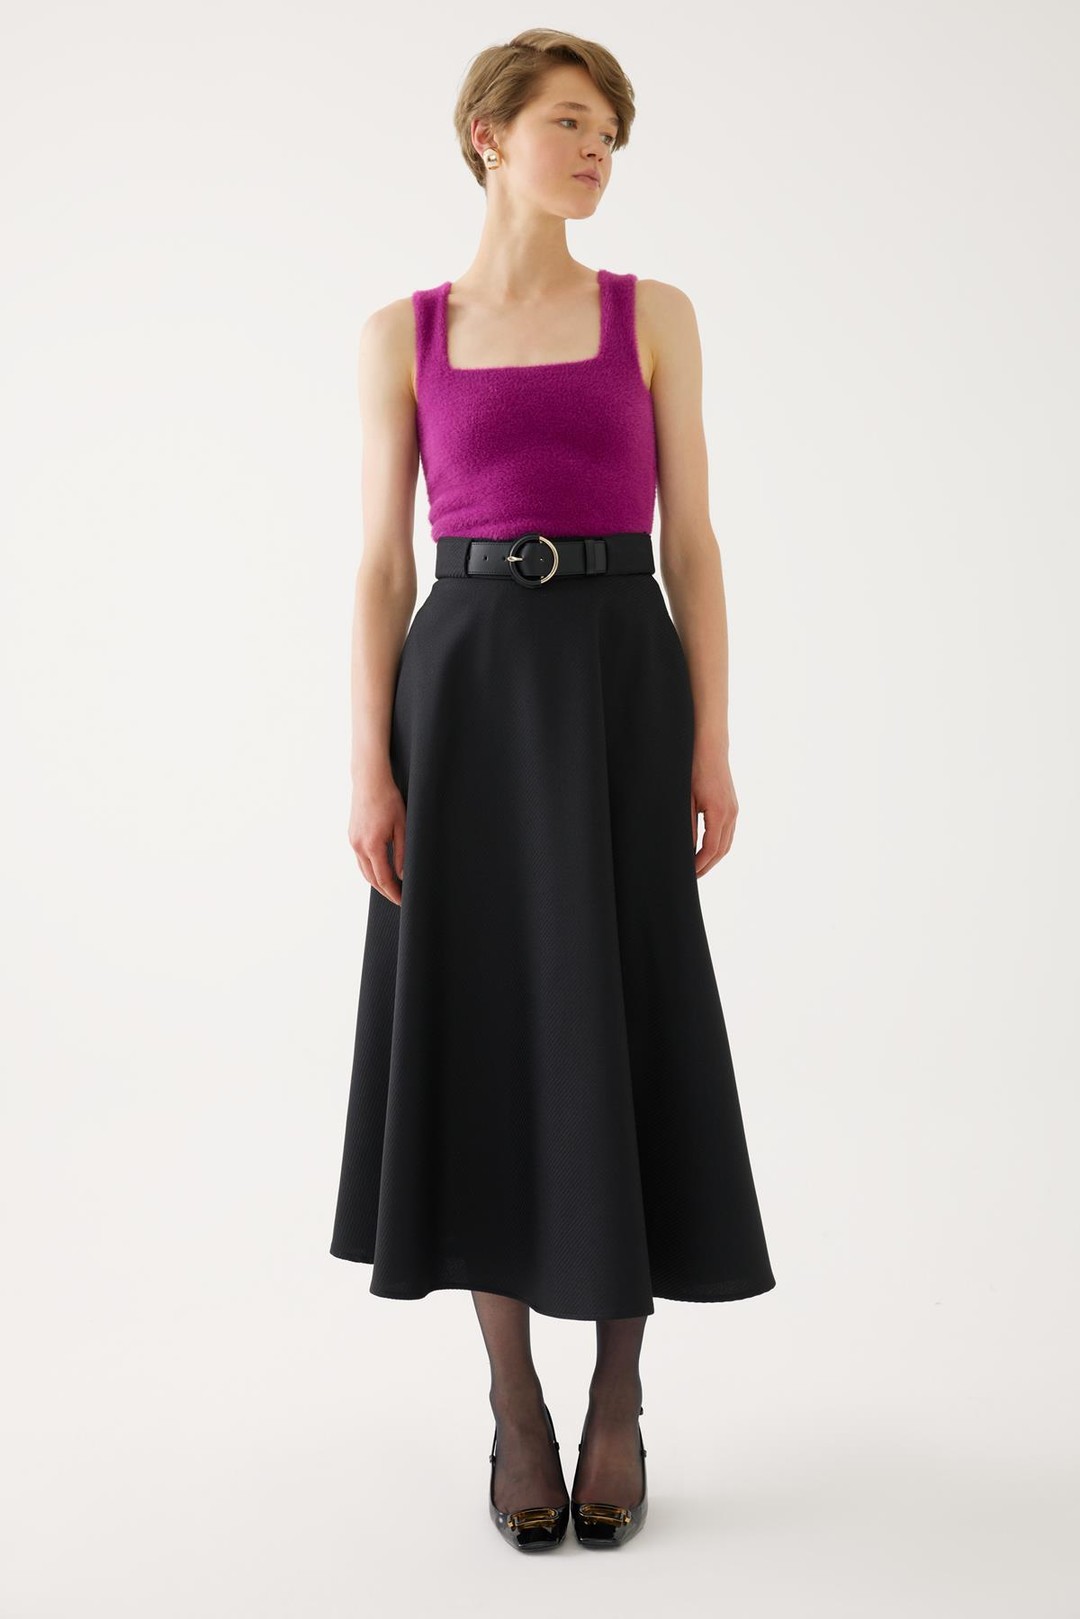 Dim Skirt with Belt Accessories 1